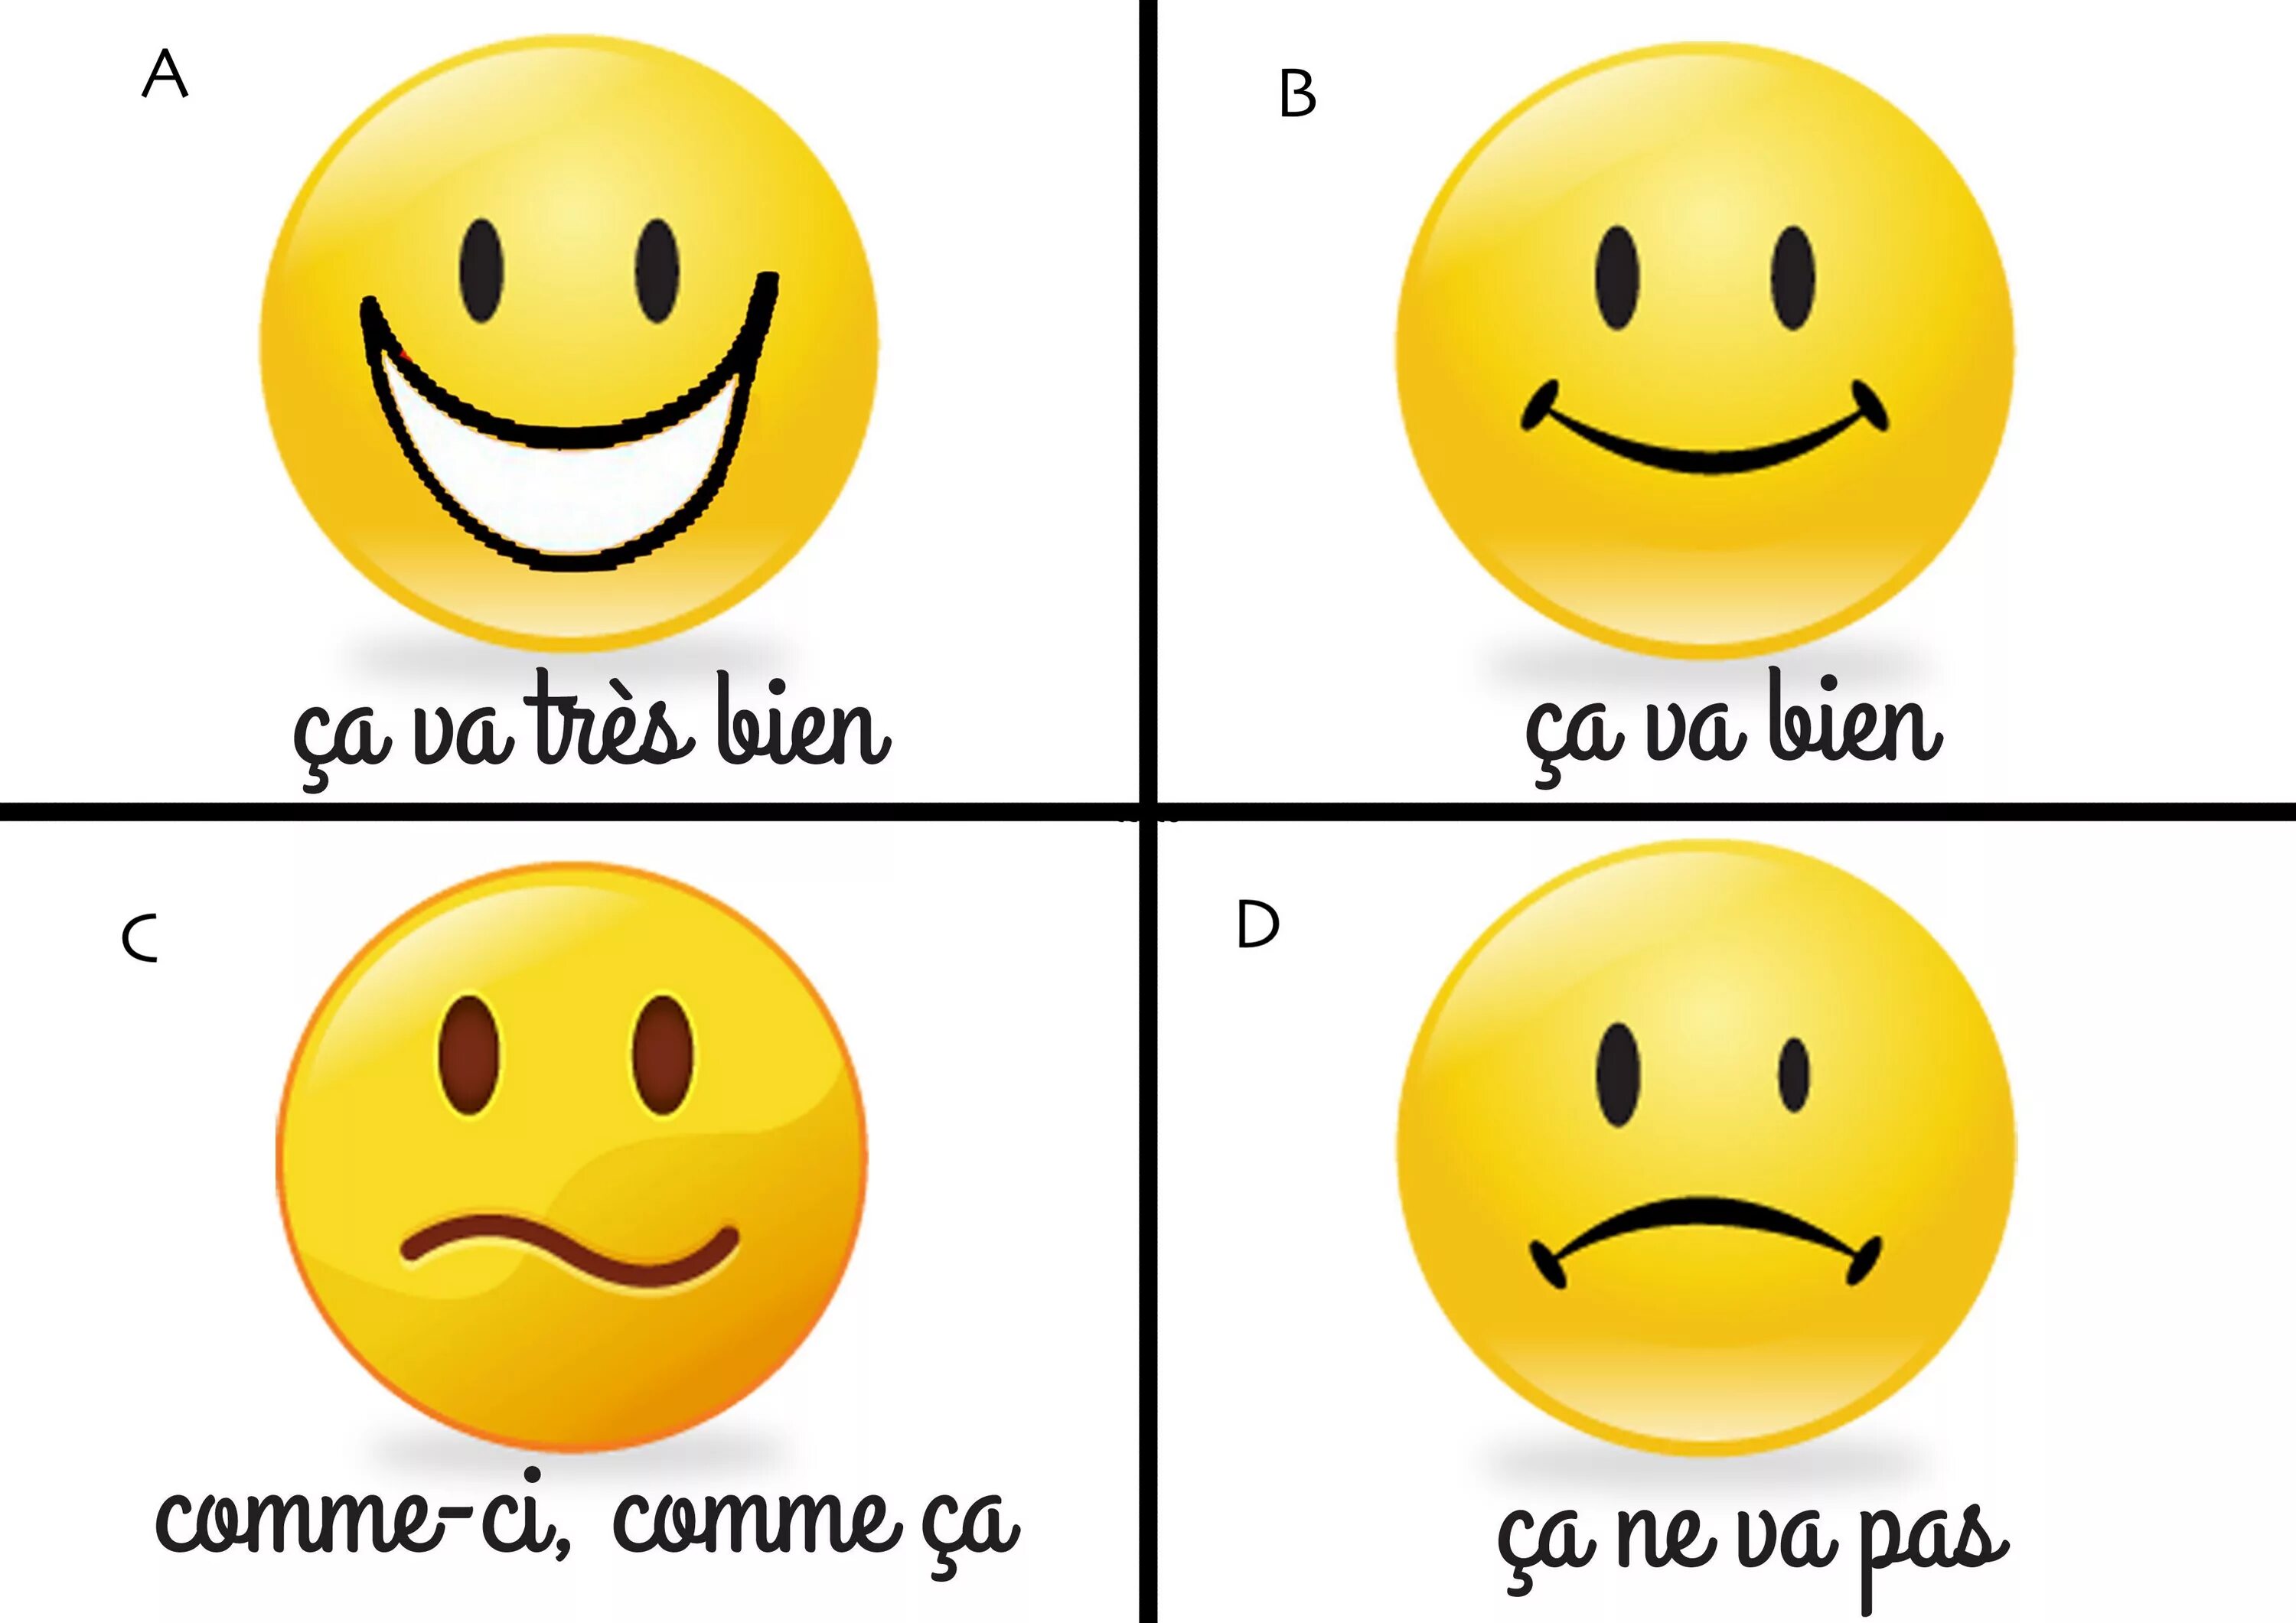 Il est bien. Приветствие на французском для детей. Эмоции на французском языке. CA va на французском. Эмоции и чувства на французском.